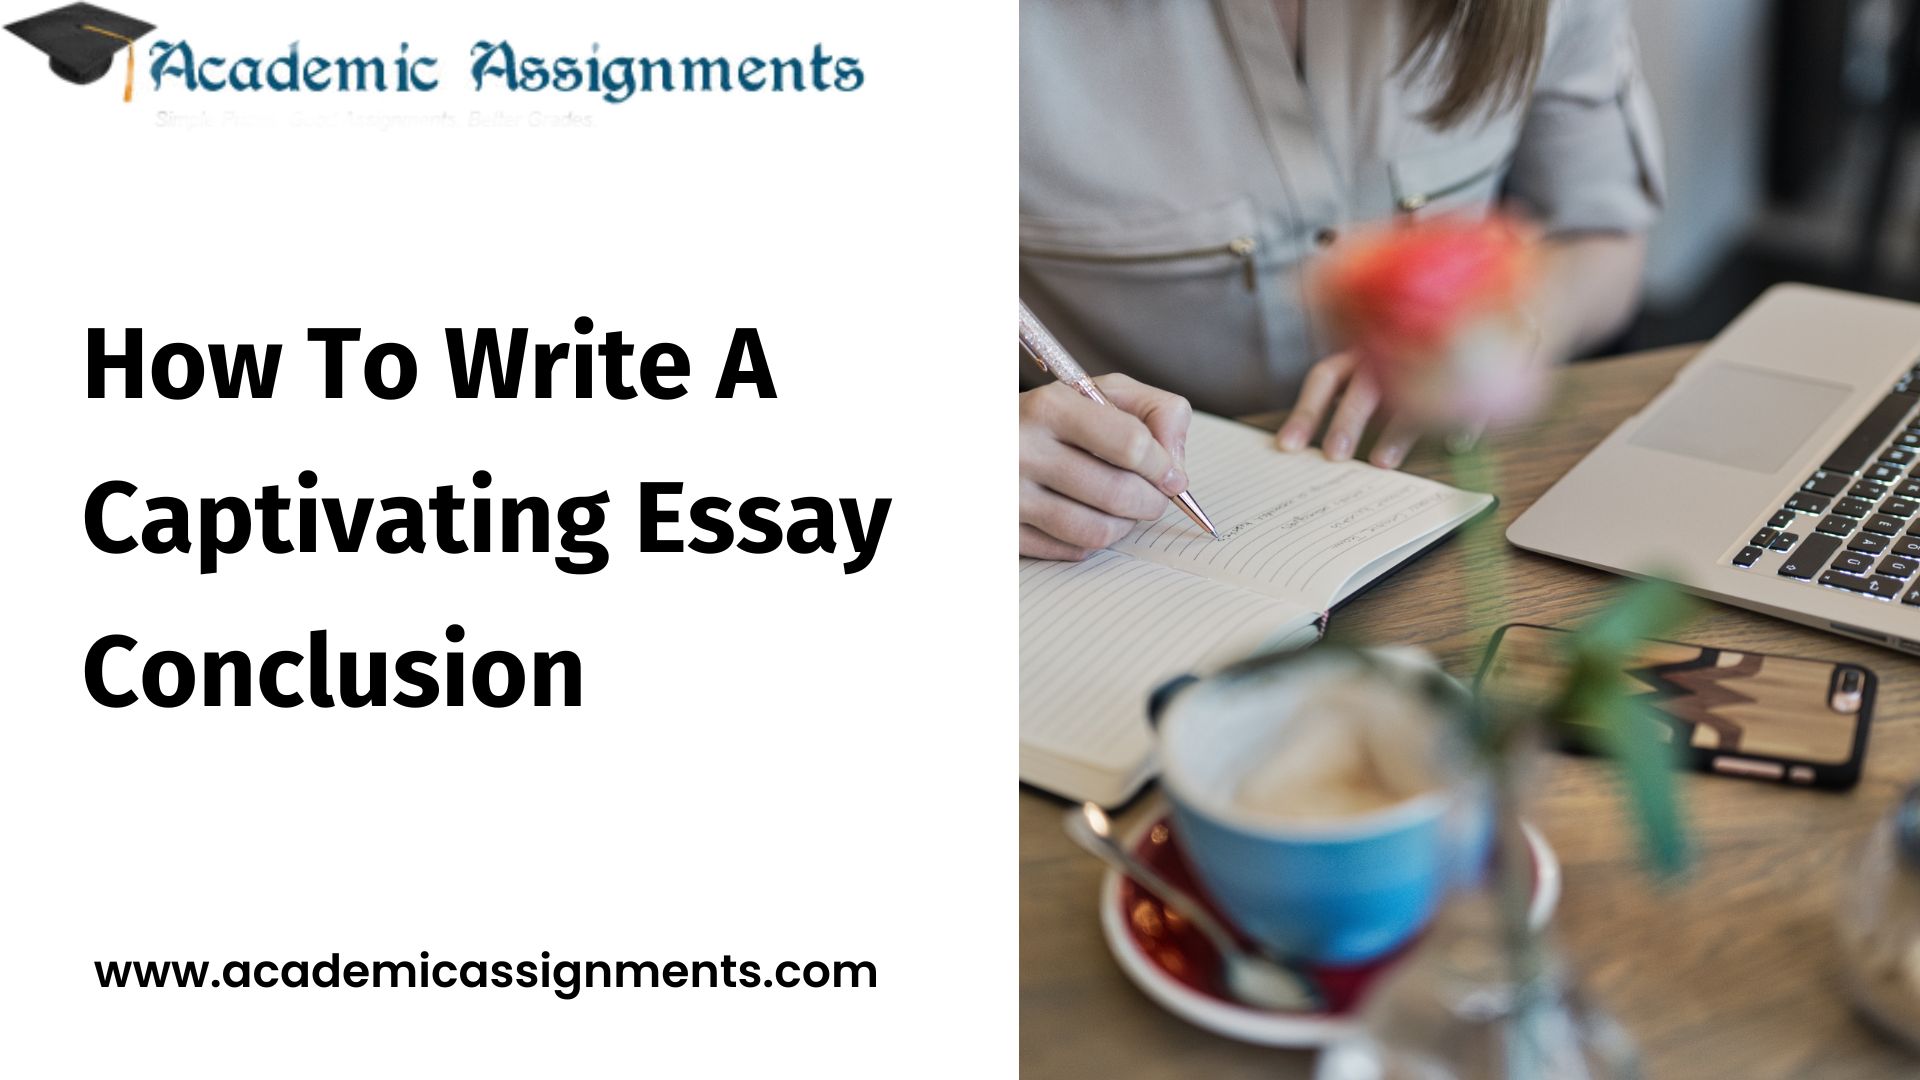 How To Write A Captivating Essay Conclusion